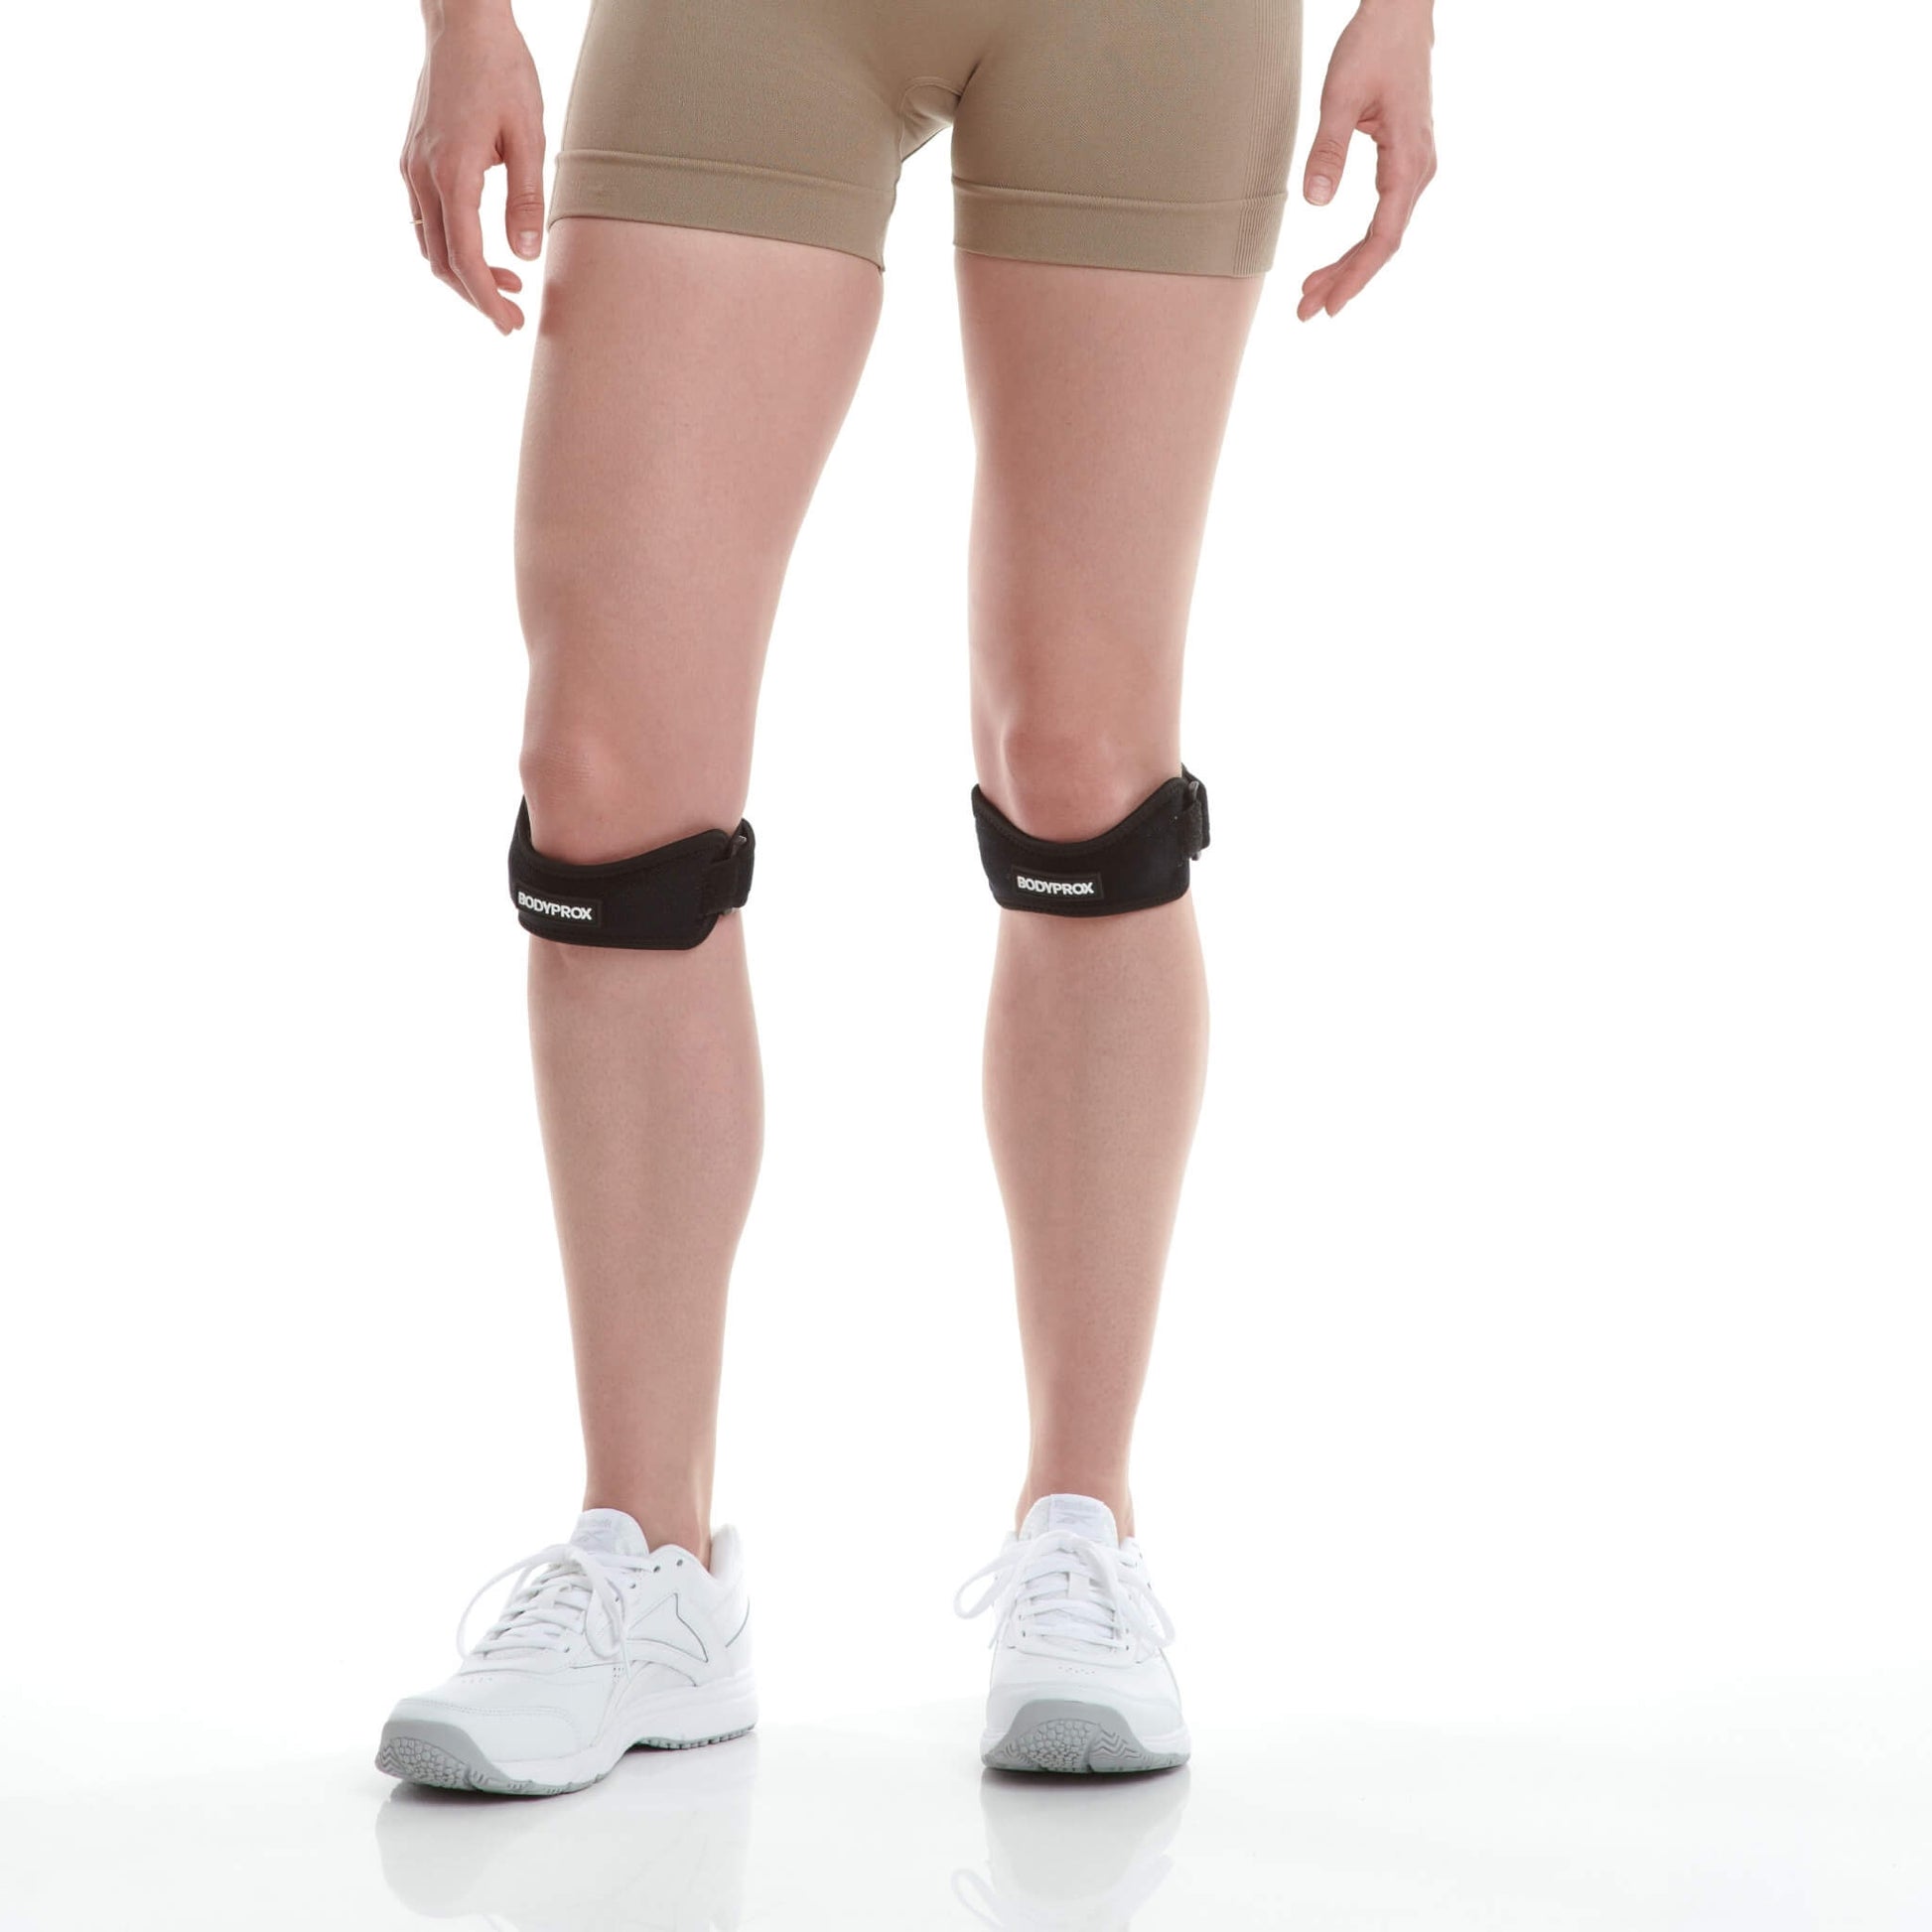 Bodyprox Patella Tendon Knee Strap, Knee Pain Relief Support Brace